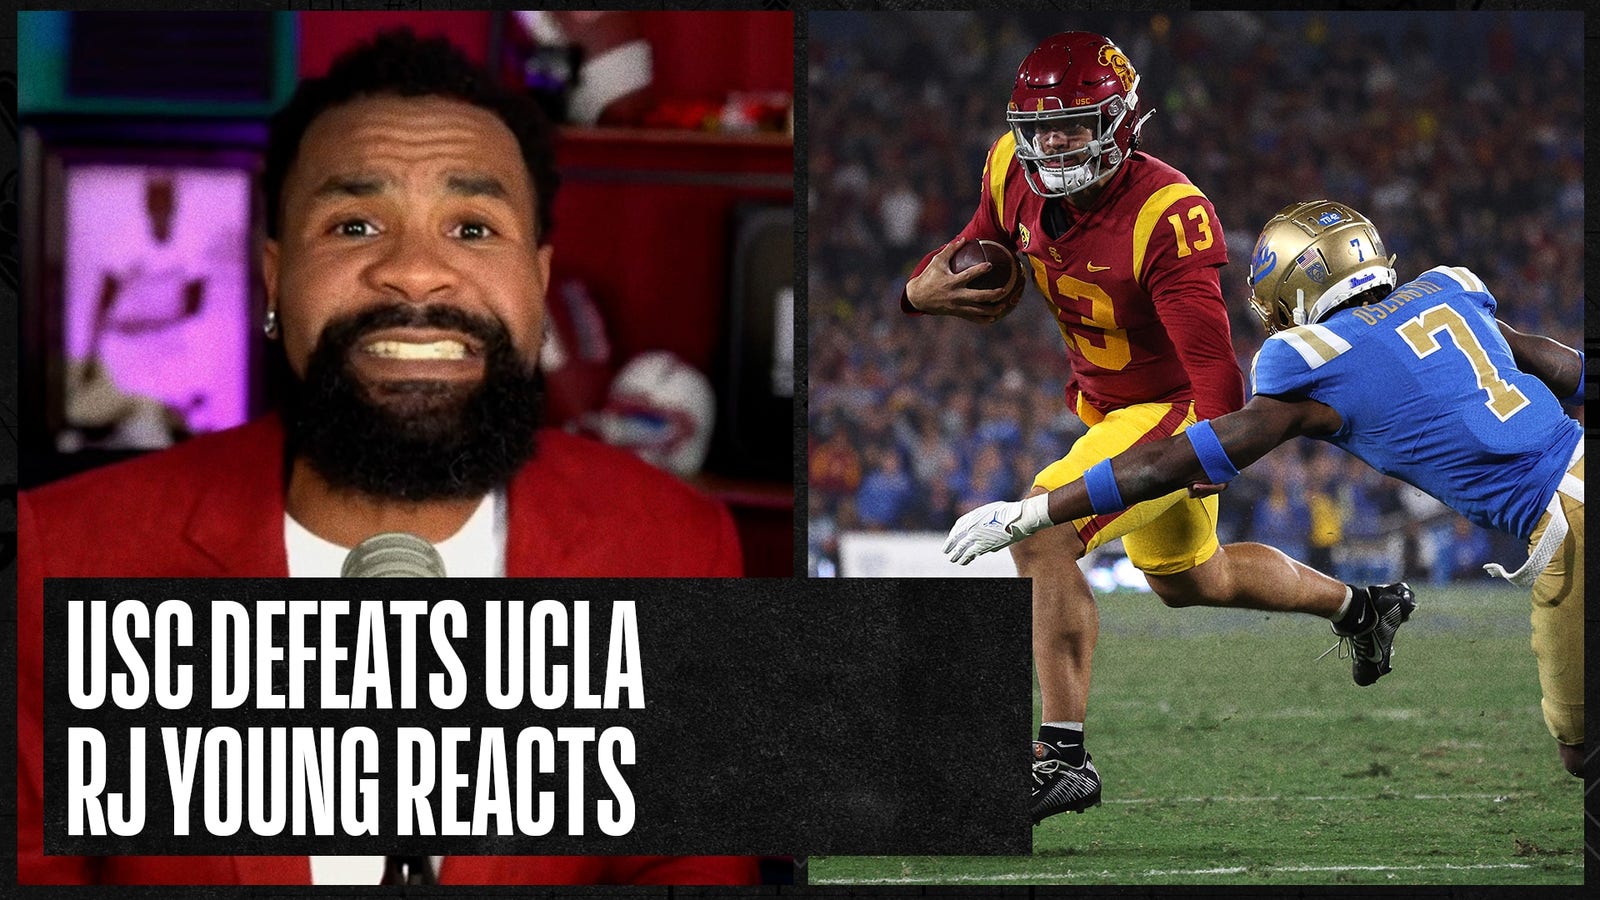 USC wins wild one vs. UCLA